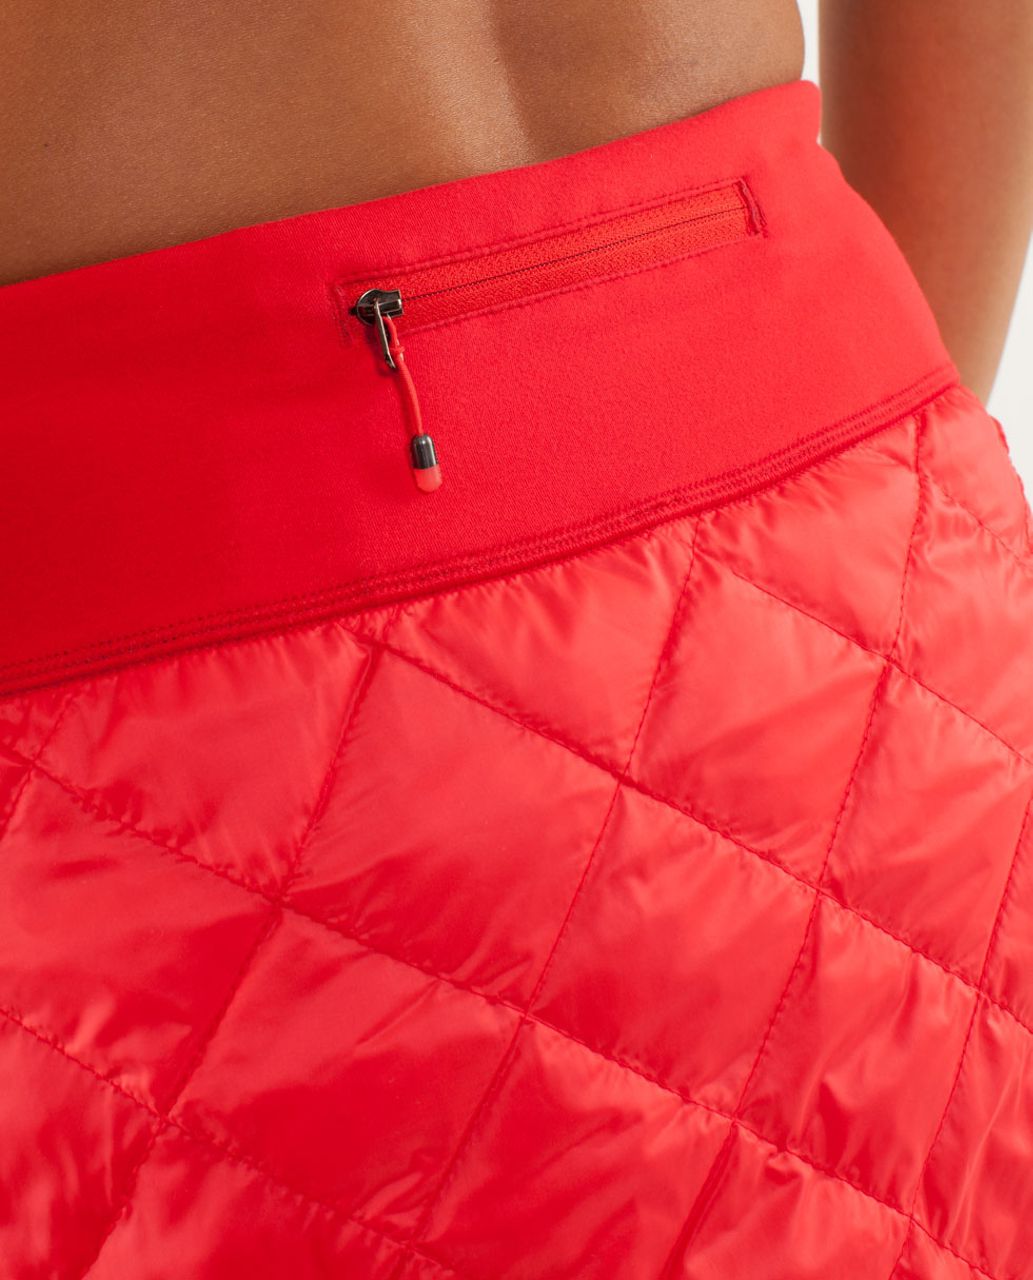 Lululemon Hot Cheeks Skirt - Slope Stripe Printed Love Red 